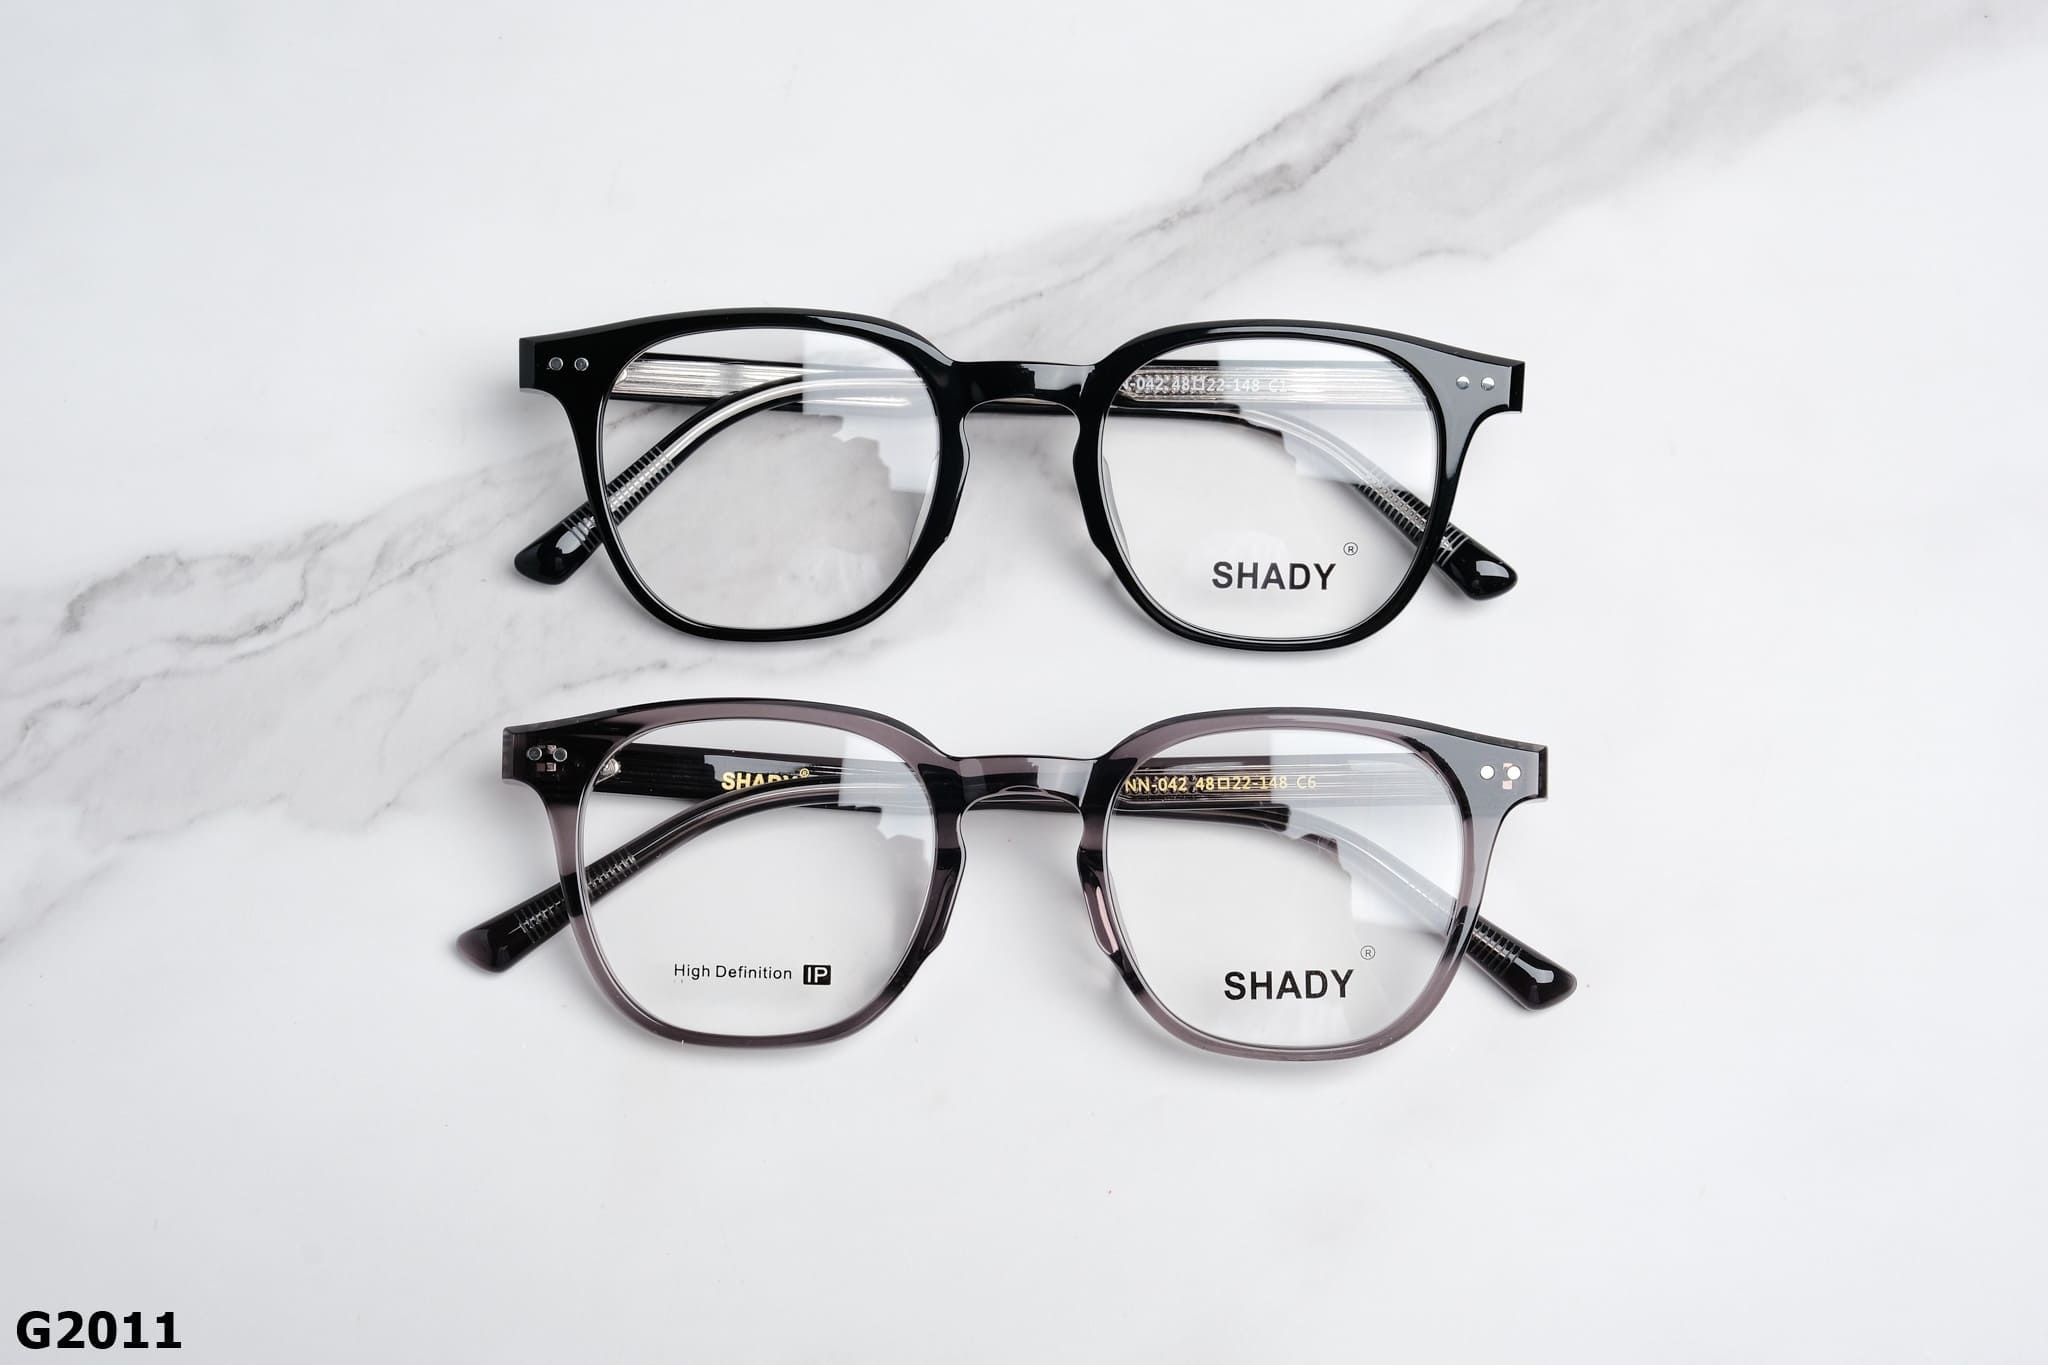  SHADY Eyewear - Glasses - G2011 